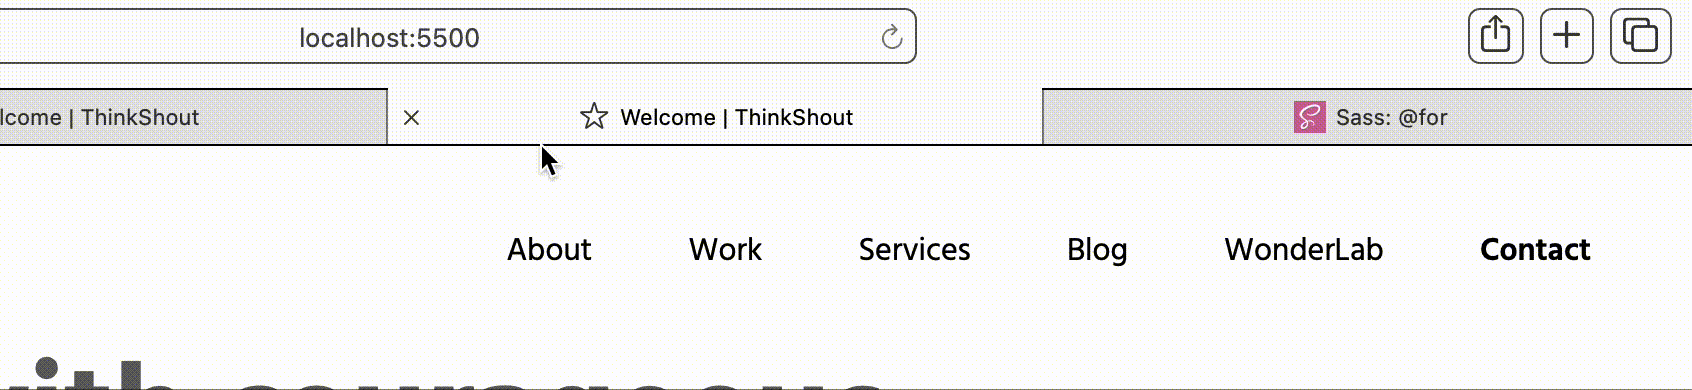 thinkshout menu overline for comparison (my version)